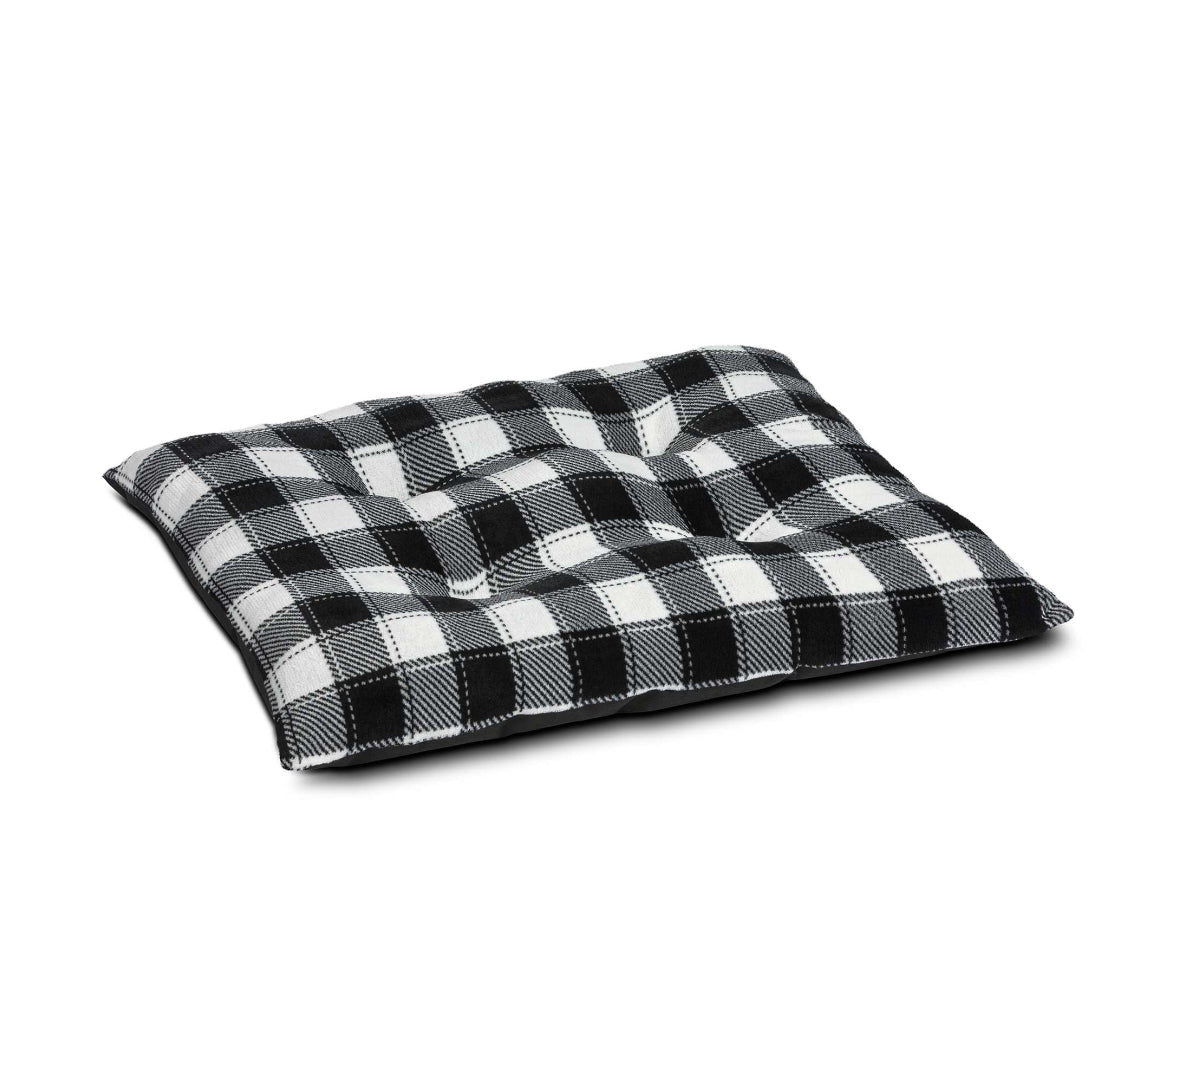 Medium Pillow Pet Bed - 4 Legs R Us